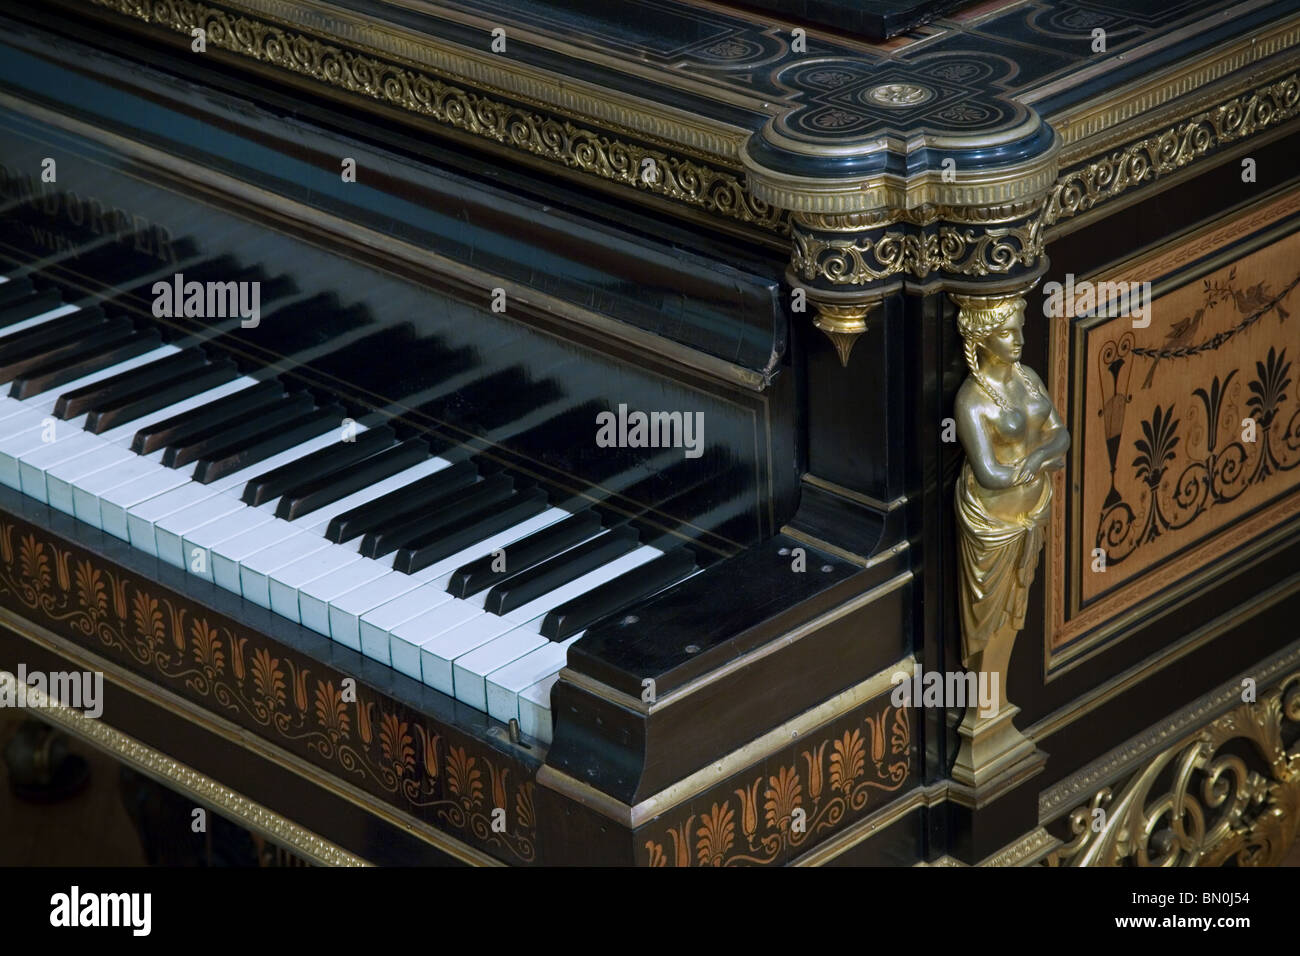 Bosendorfer grand piano keyboard detail Stock Photo